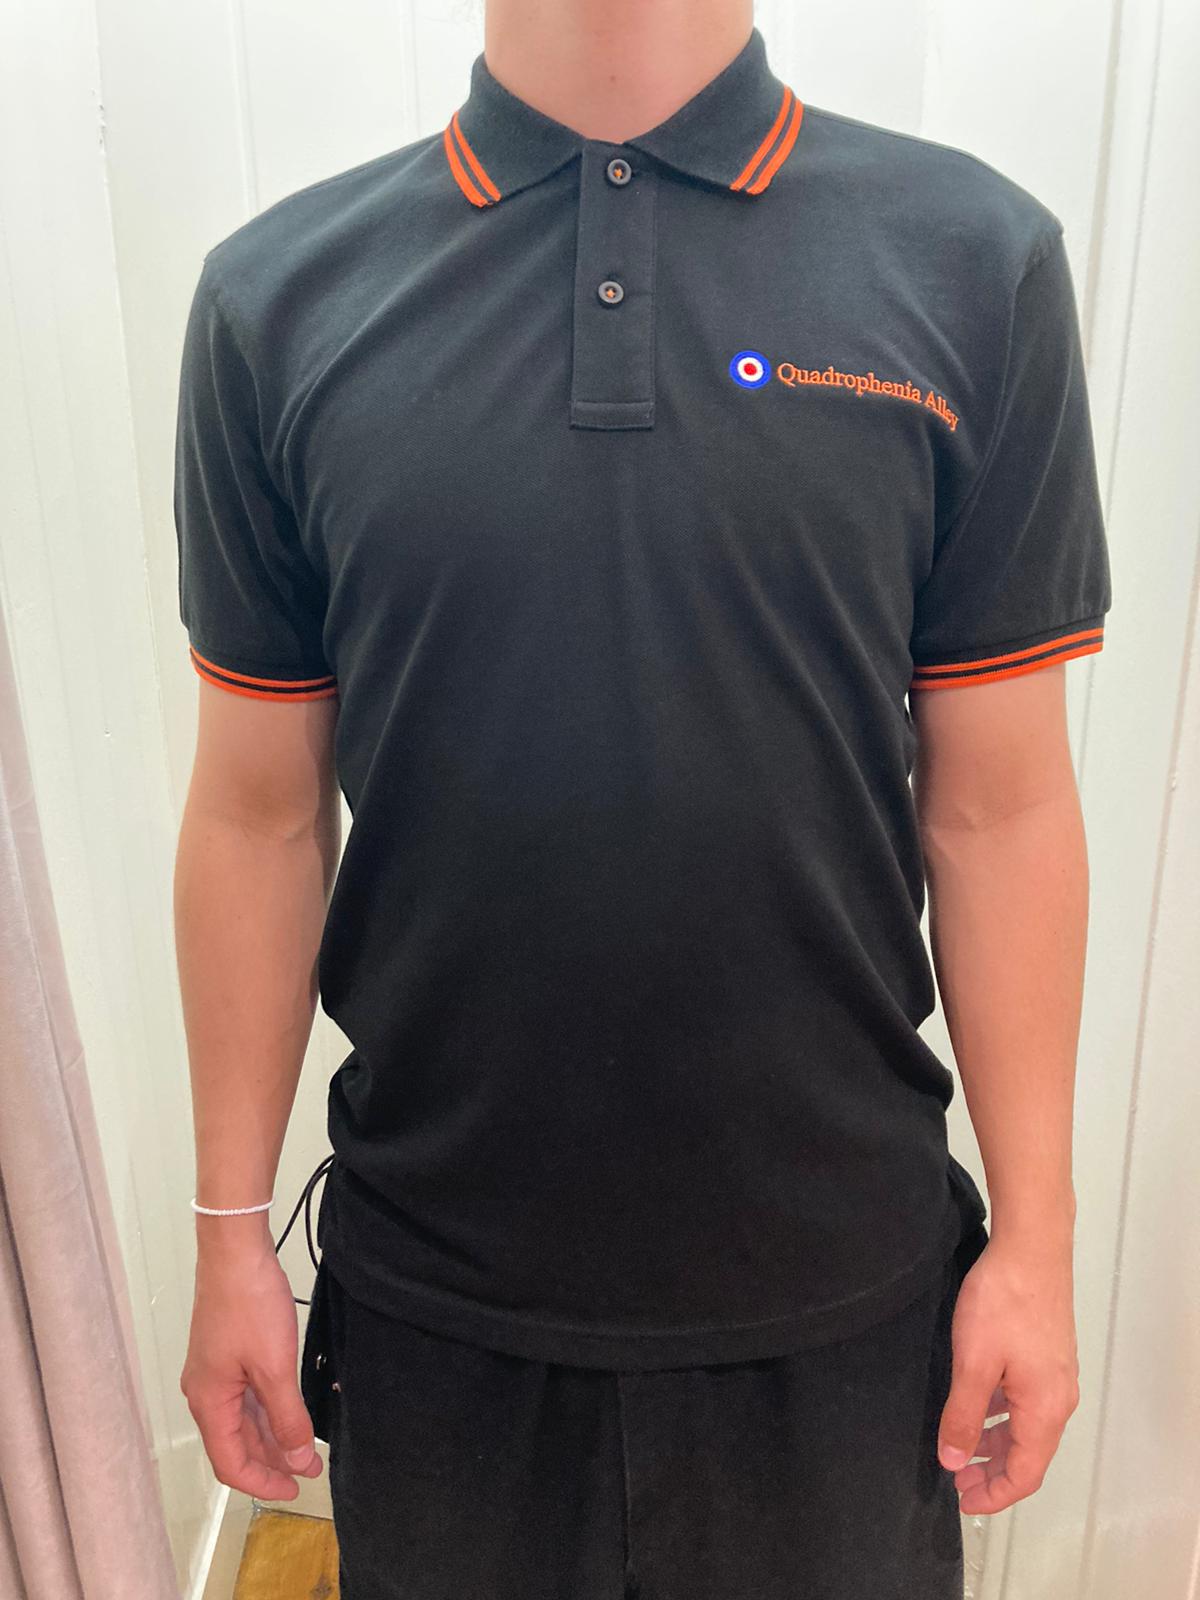 Quadrophenia Alley Men's Exclusive Target Polo Shirt Black/Orange